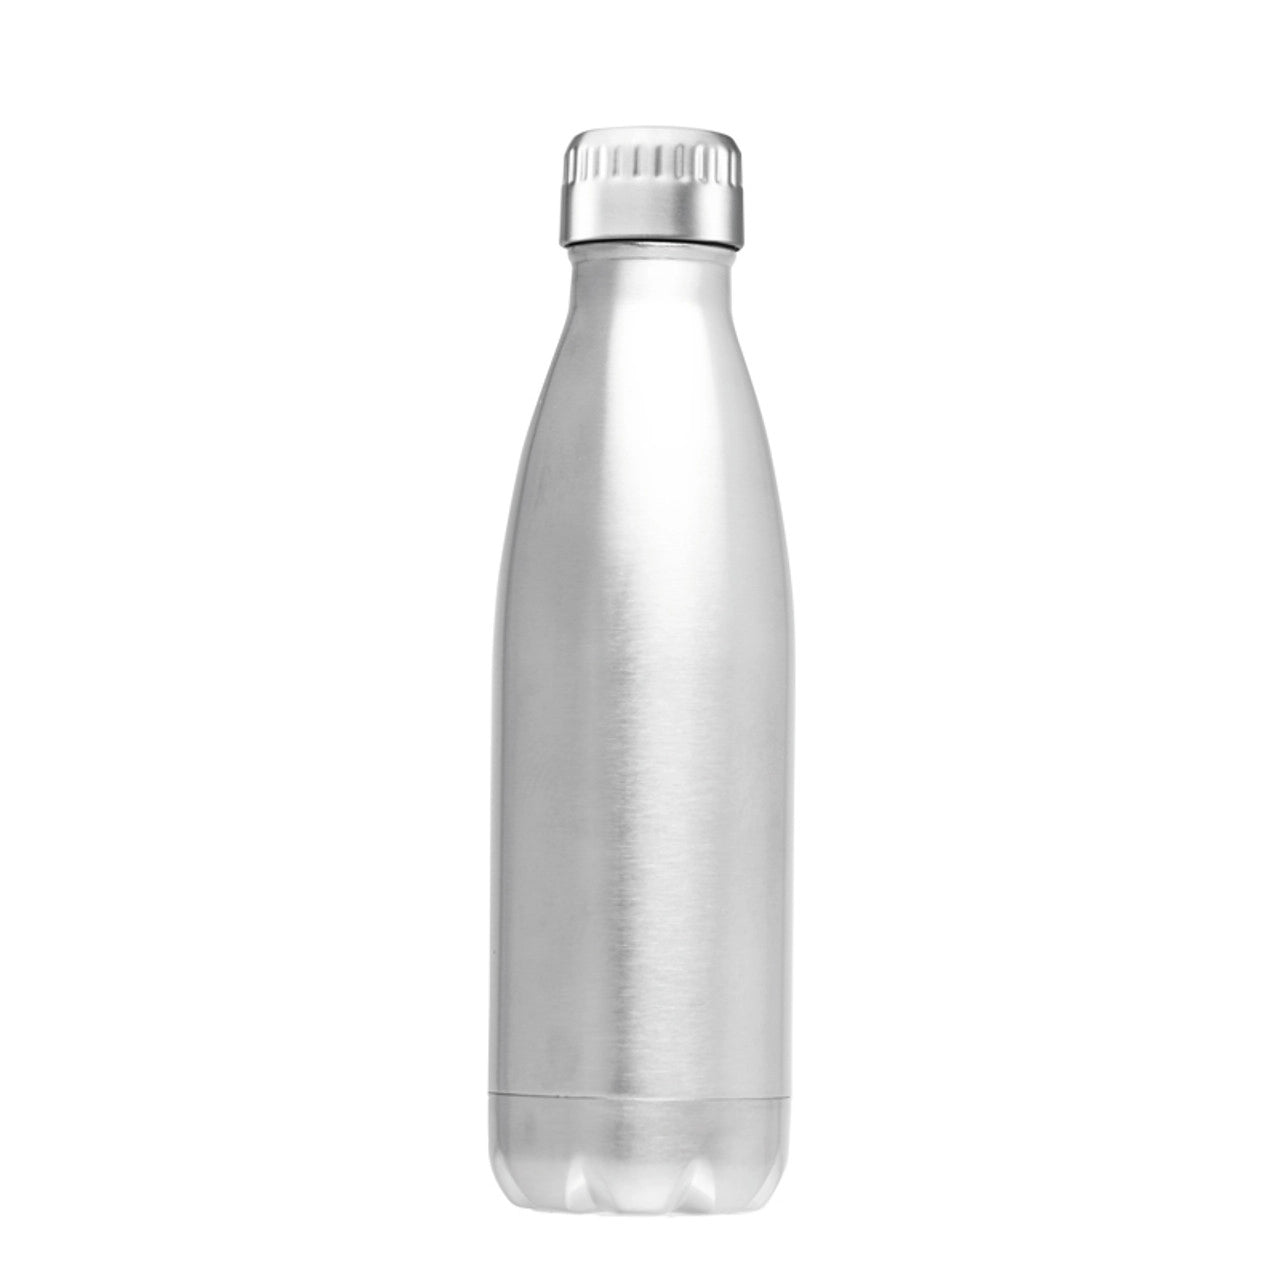 Avanti Insulated Stainless Steel Drink Bottle - 1 Litre